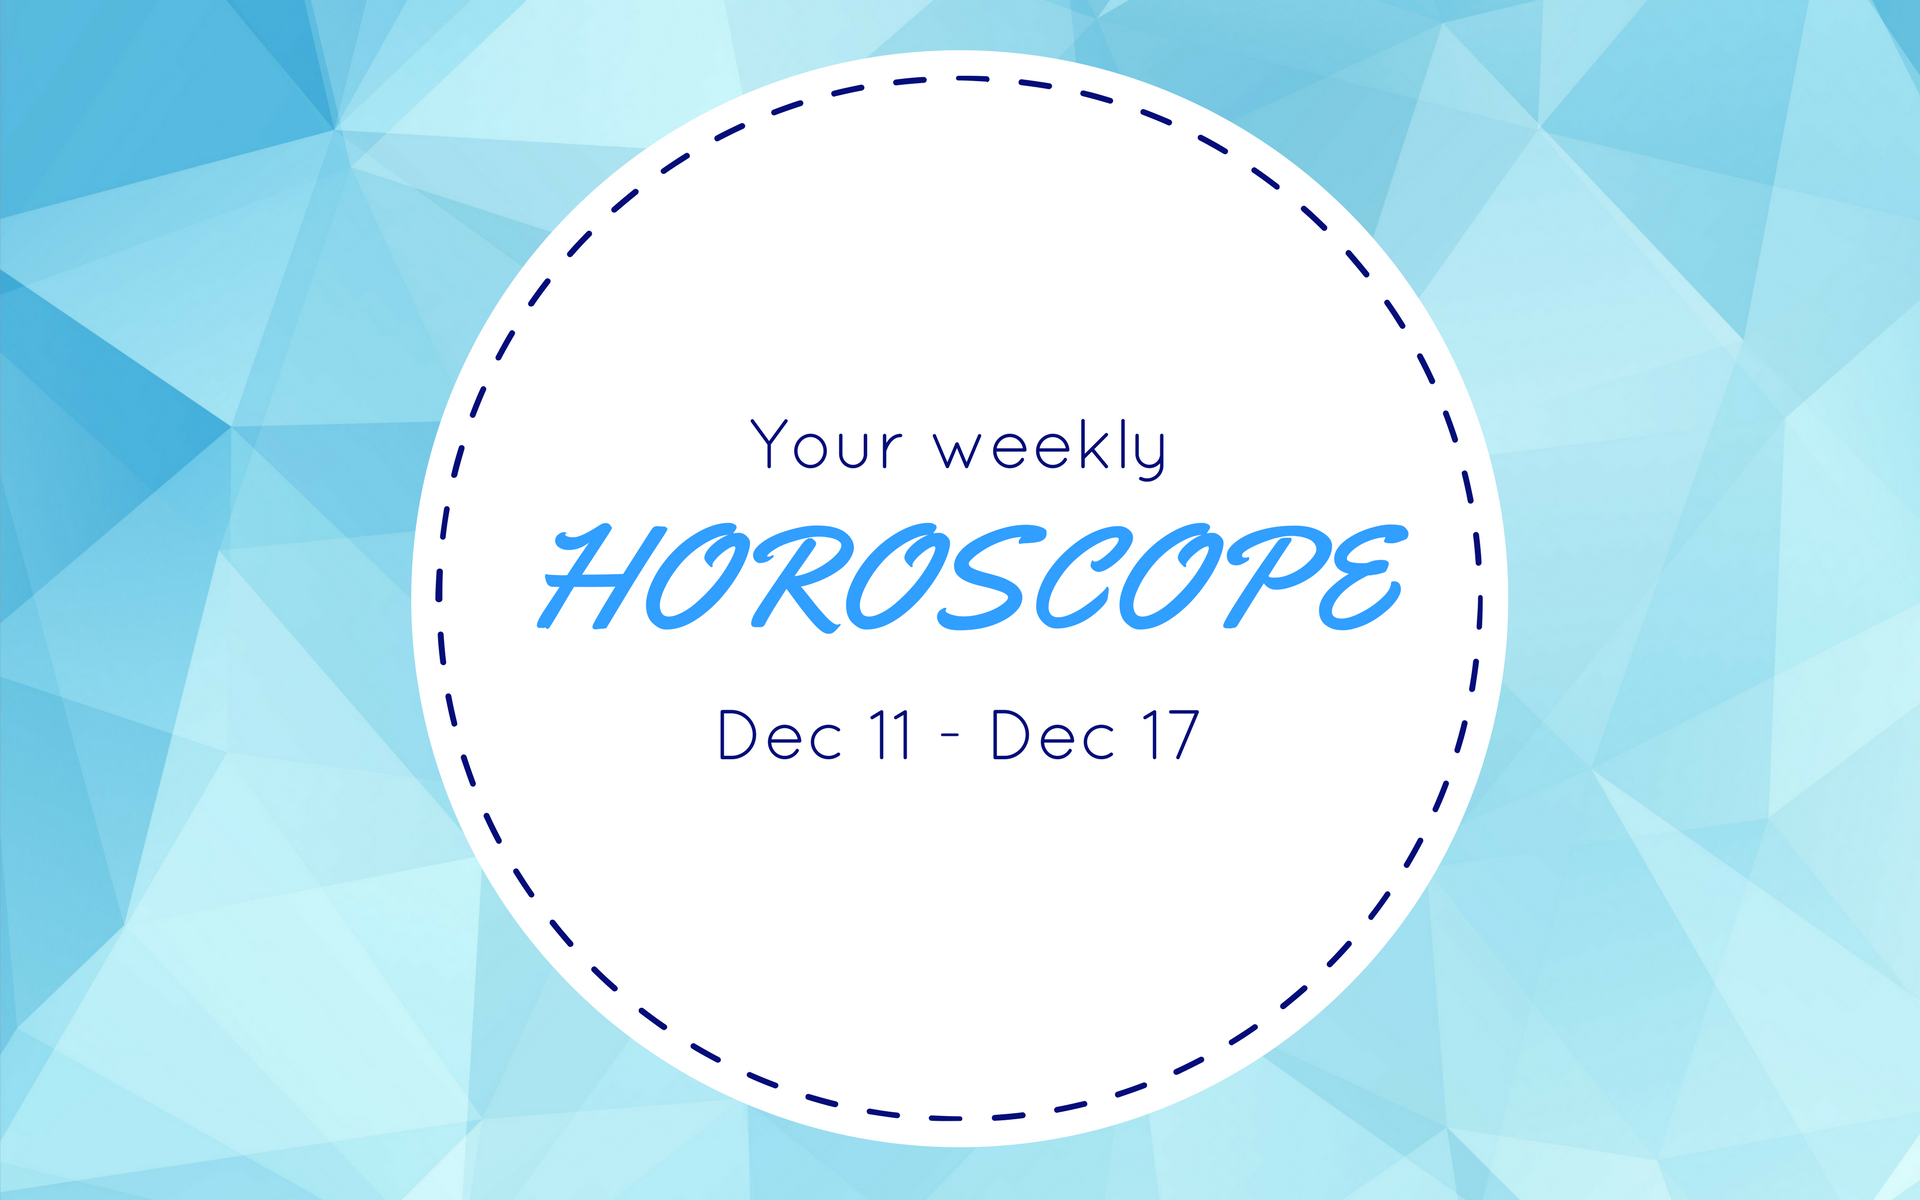 Your Weekly Horoscope: Dec 11 - Dec 17